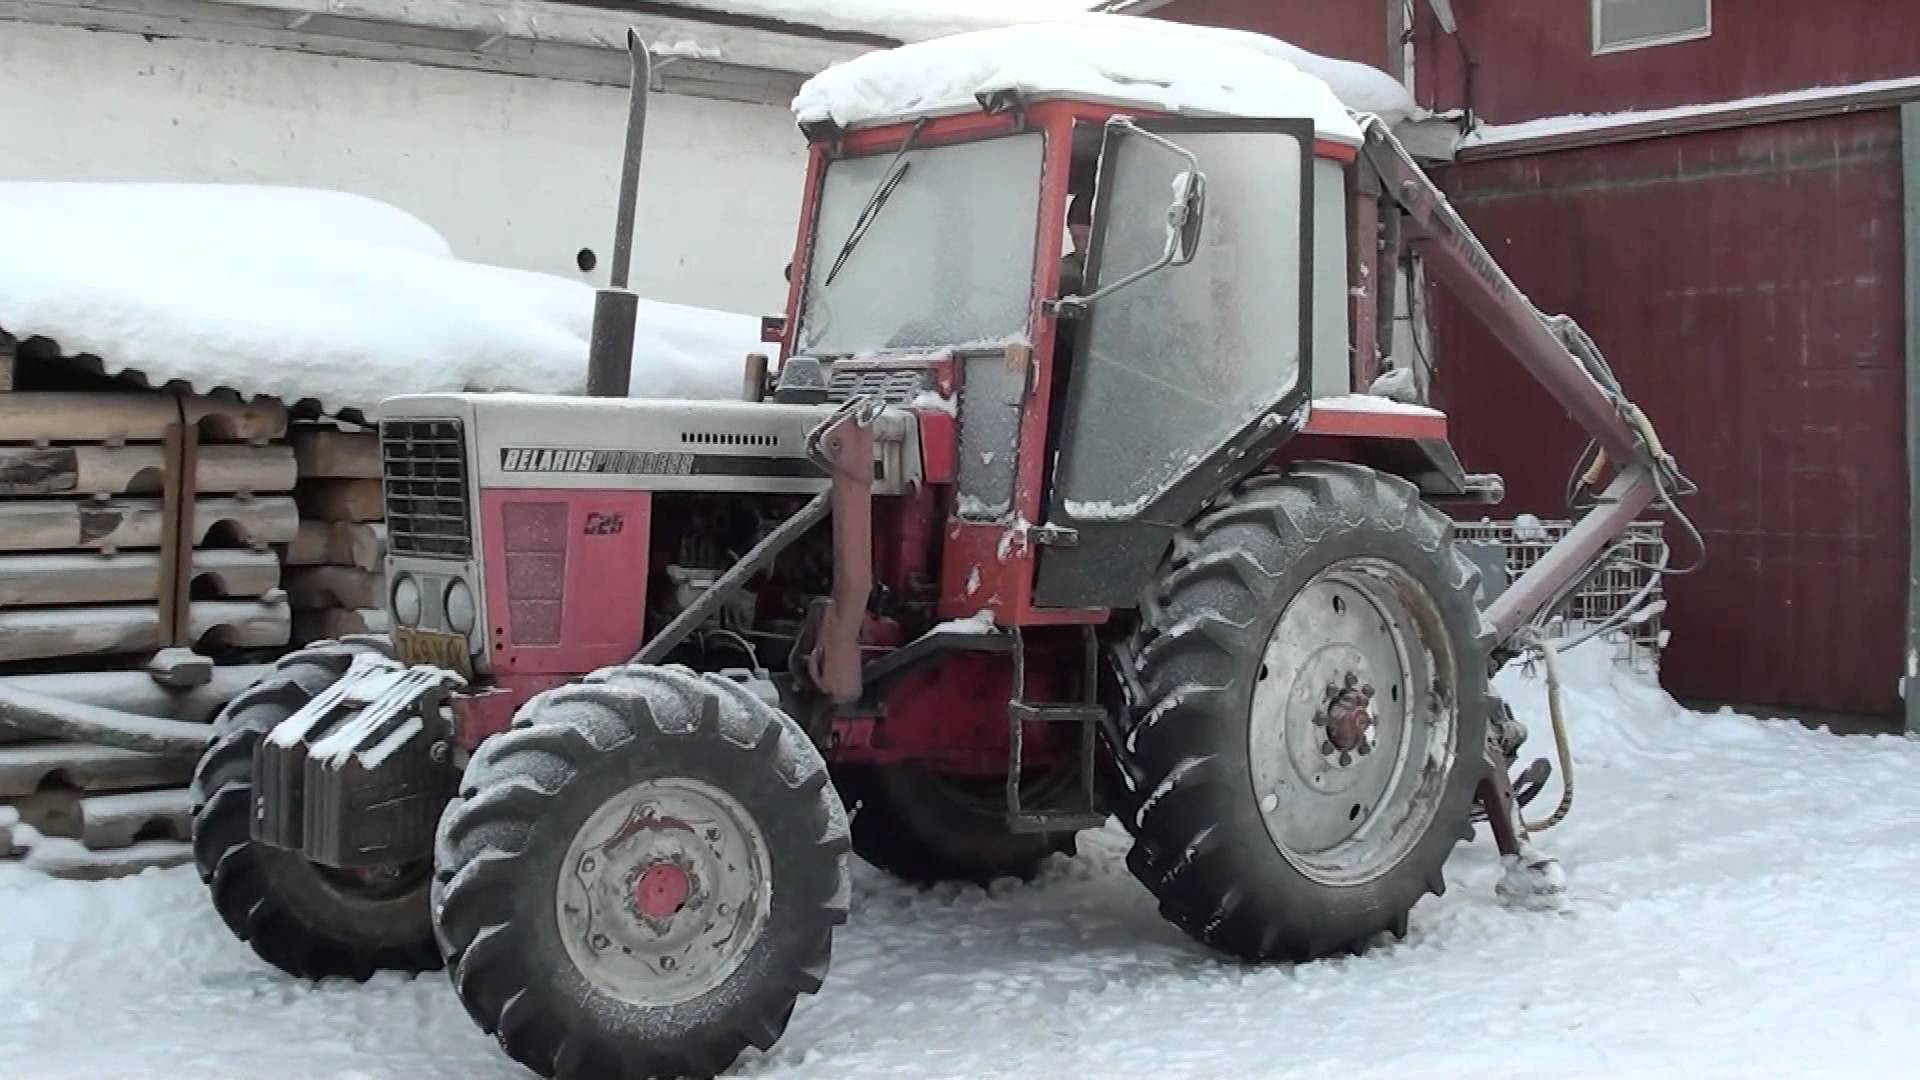 Belarus Progress 525 cold start -18c - YouTube